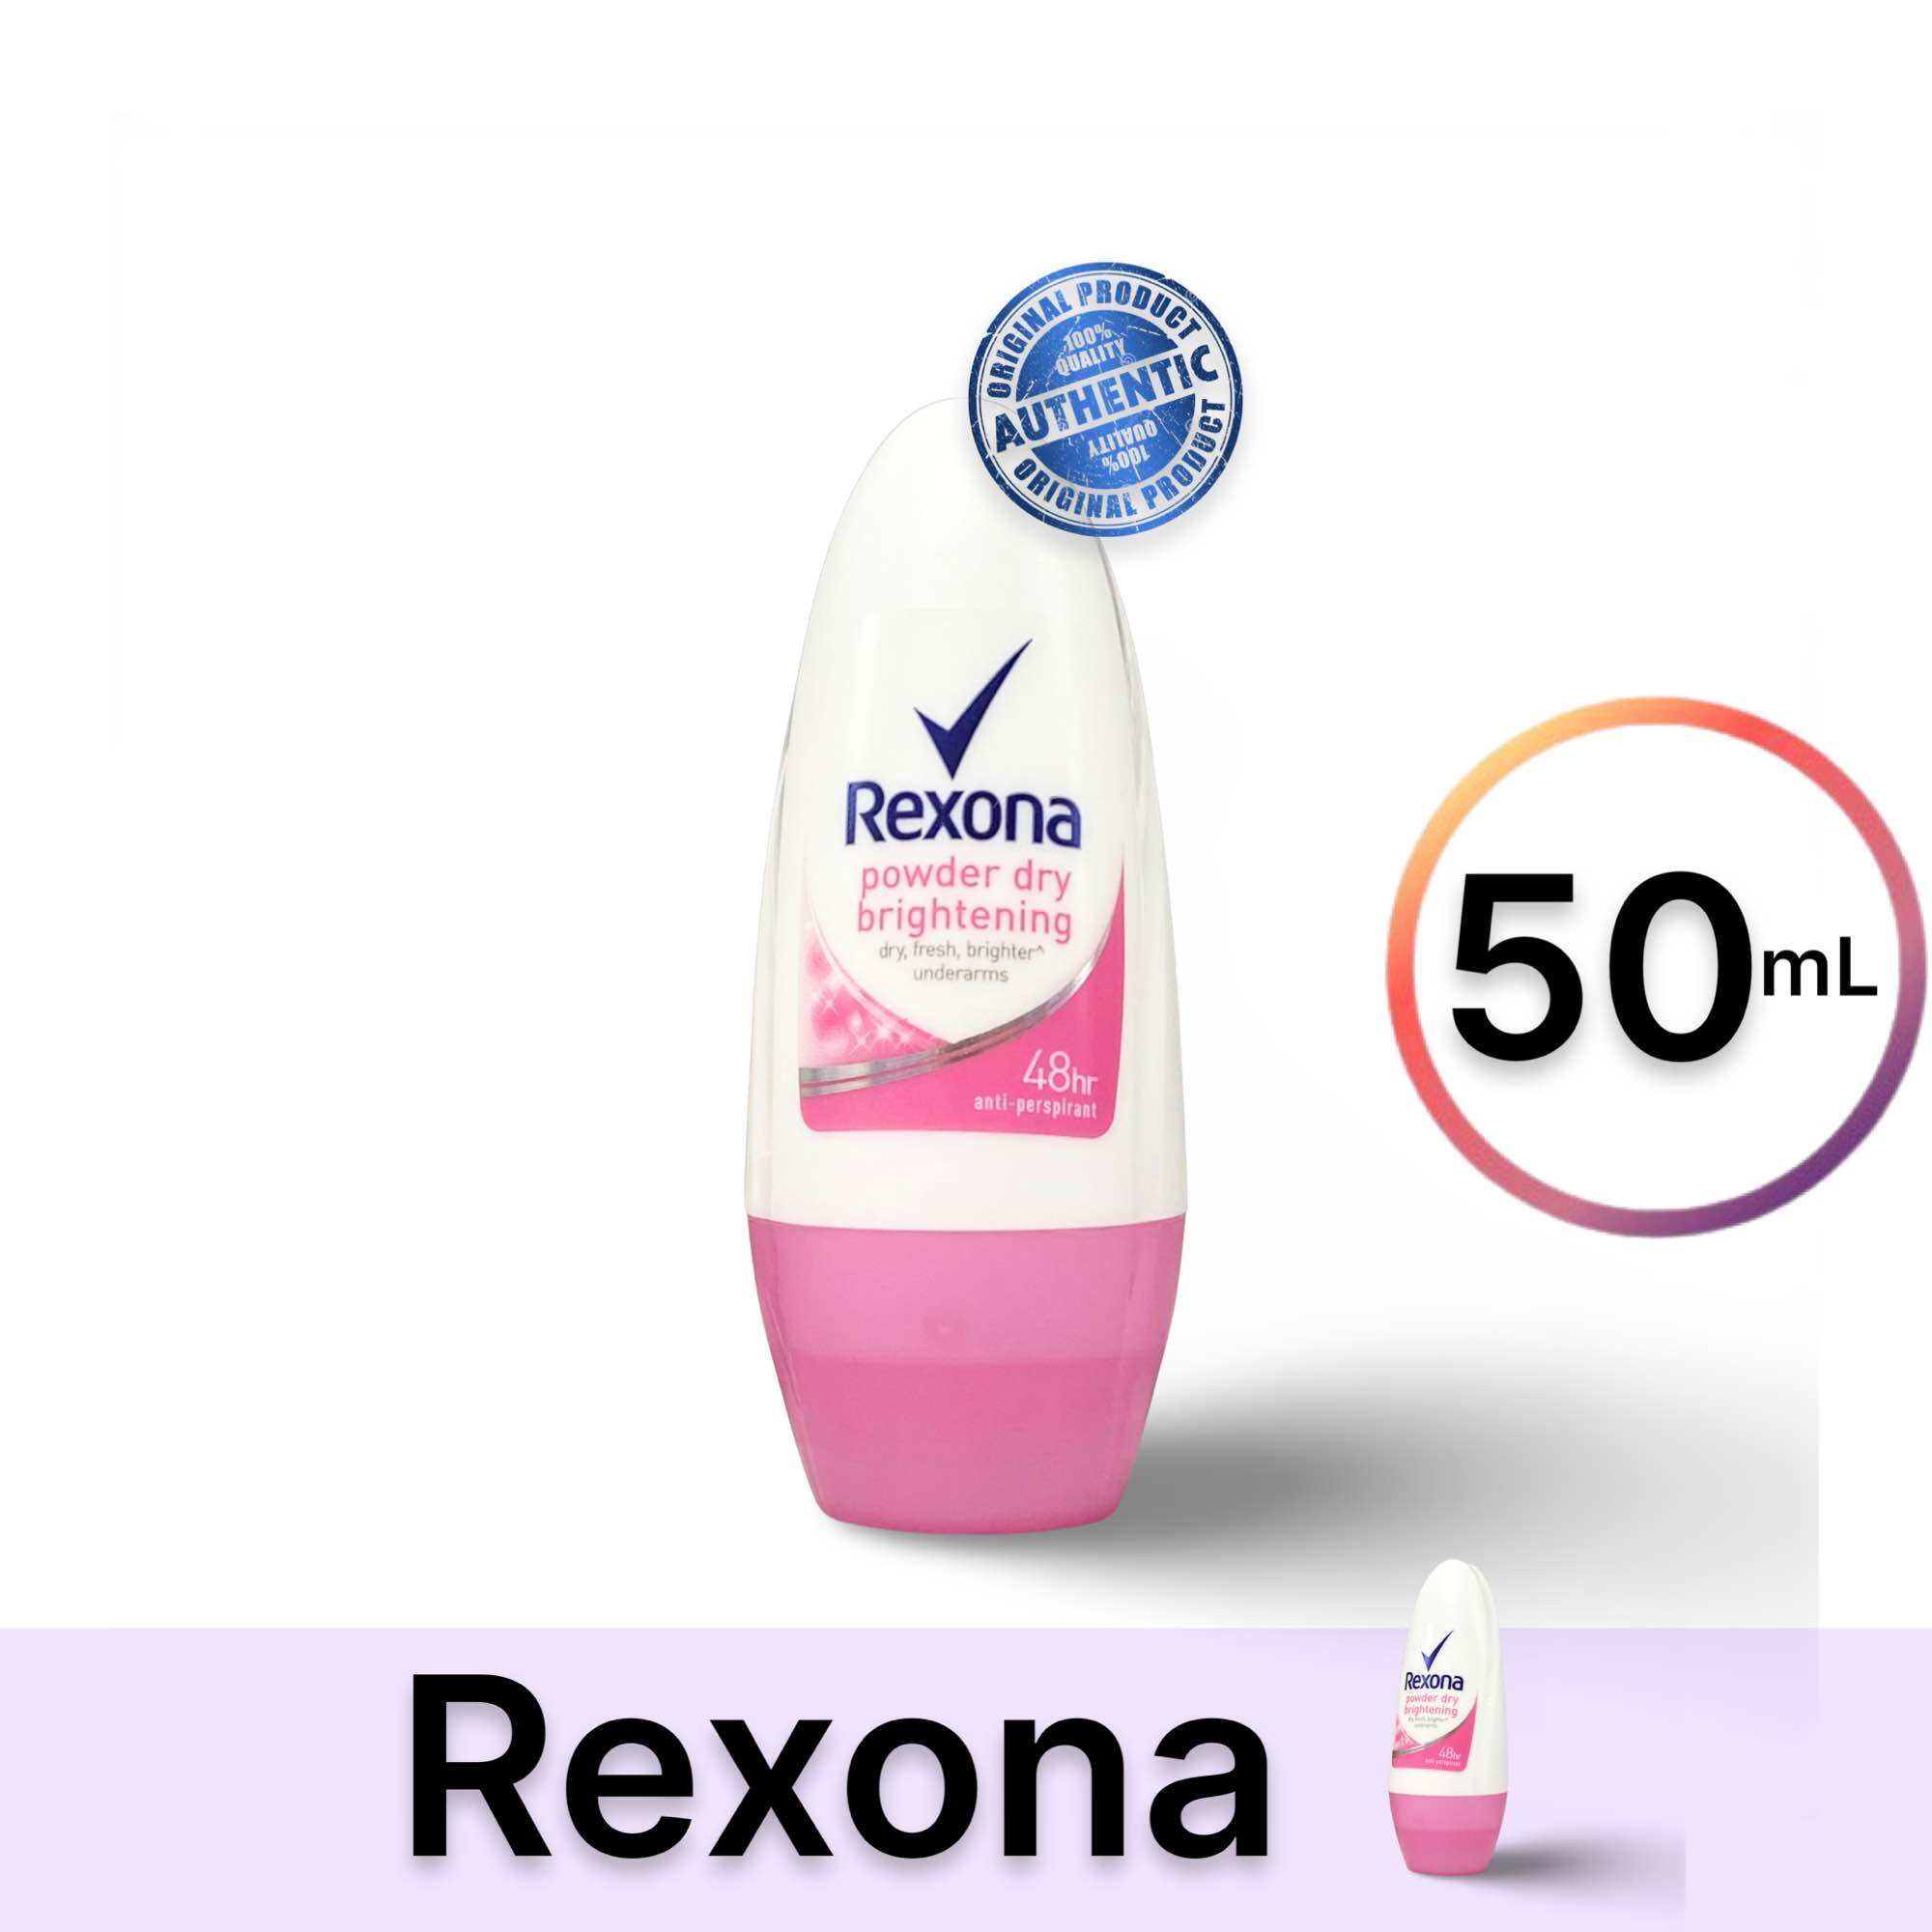 Rexona Powder Dry Brightening 50ml